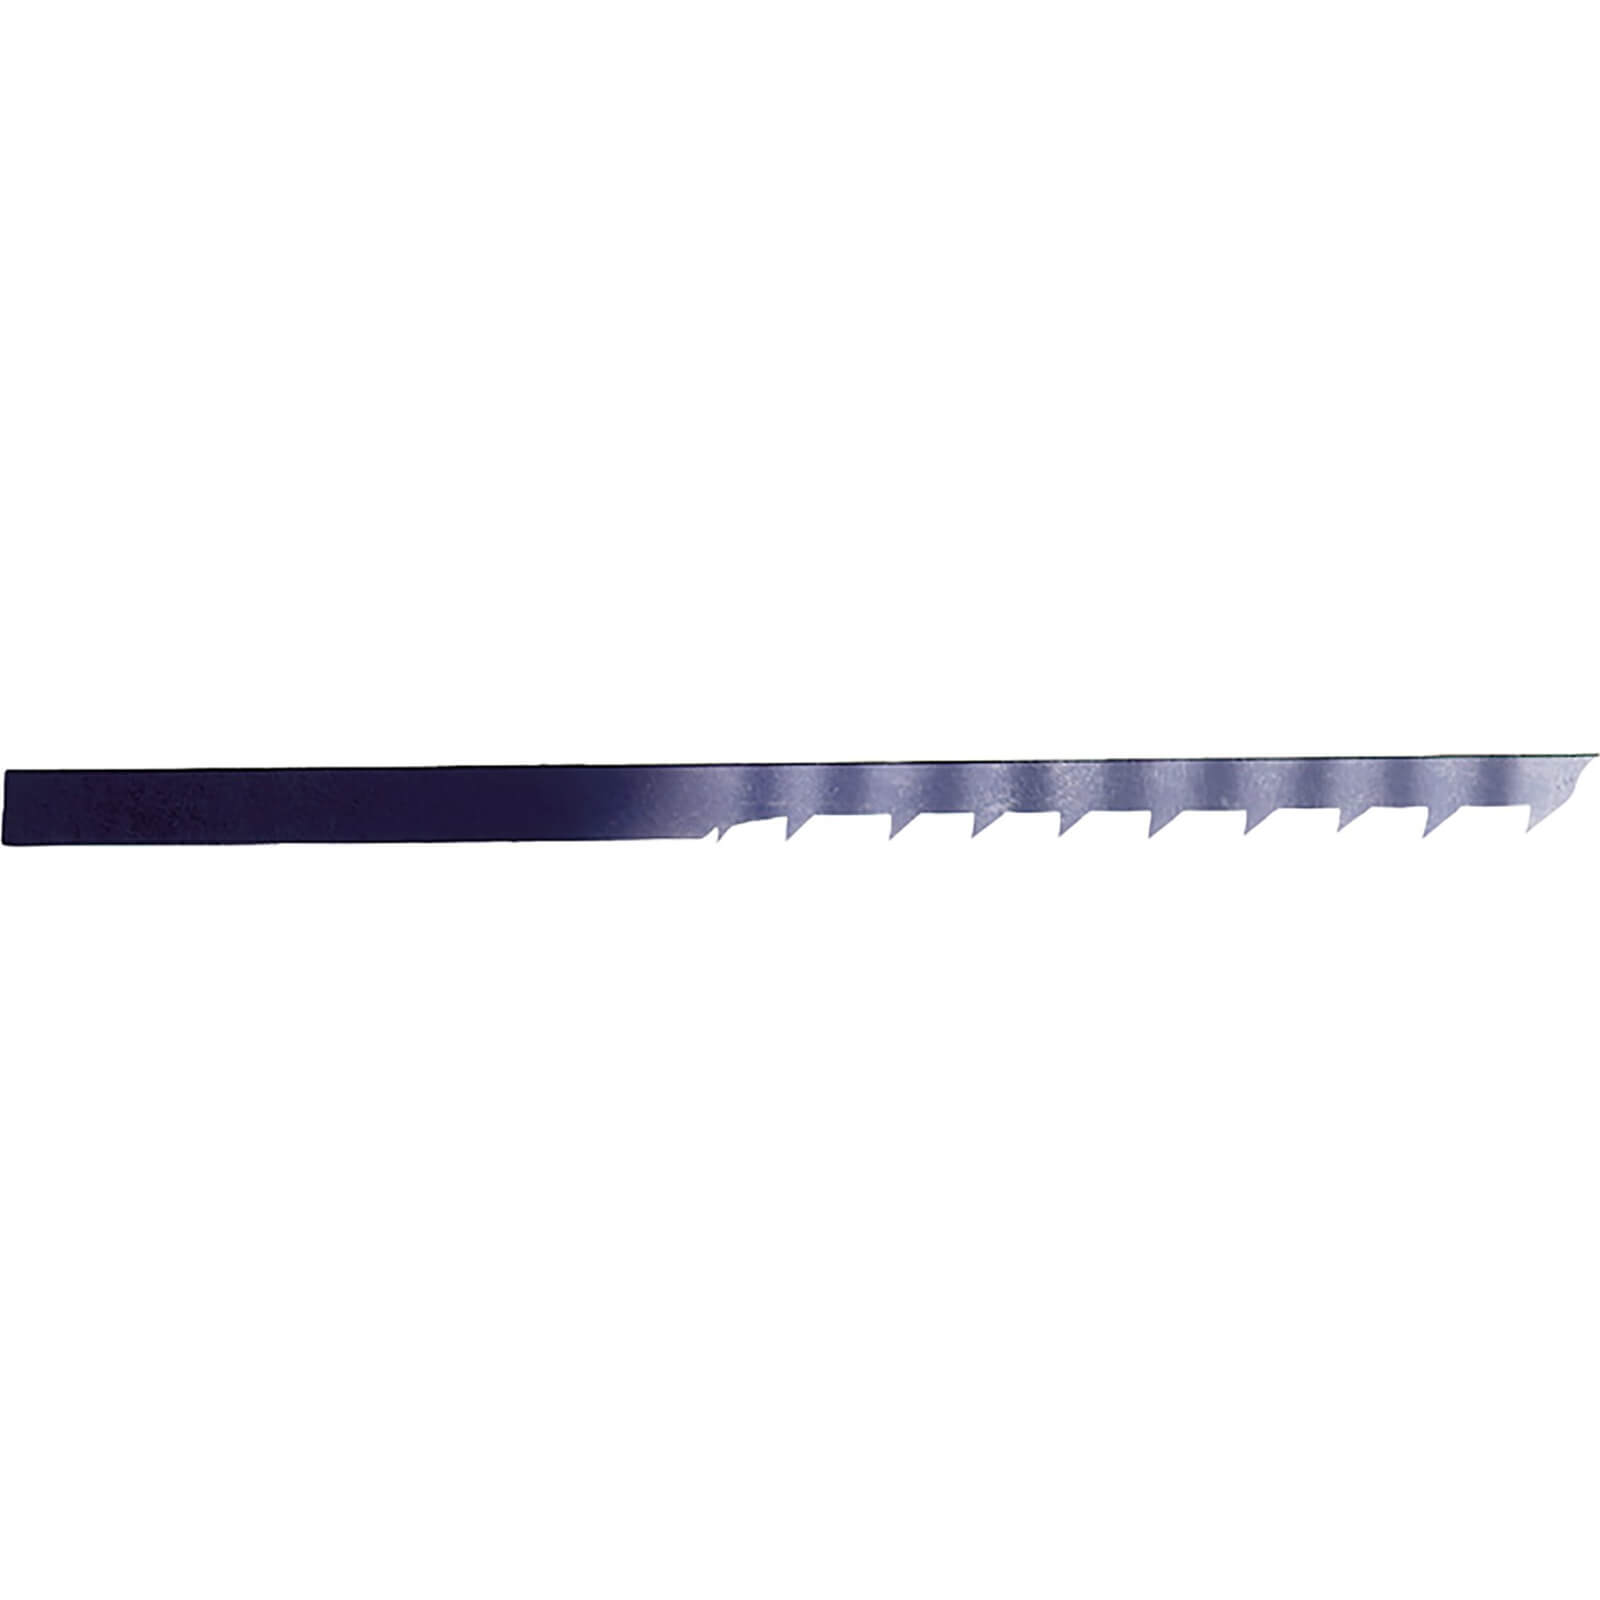 Image of Draper Plain End Fretsaw Blades 127mm 28tpi Pack of 12